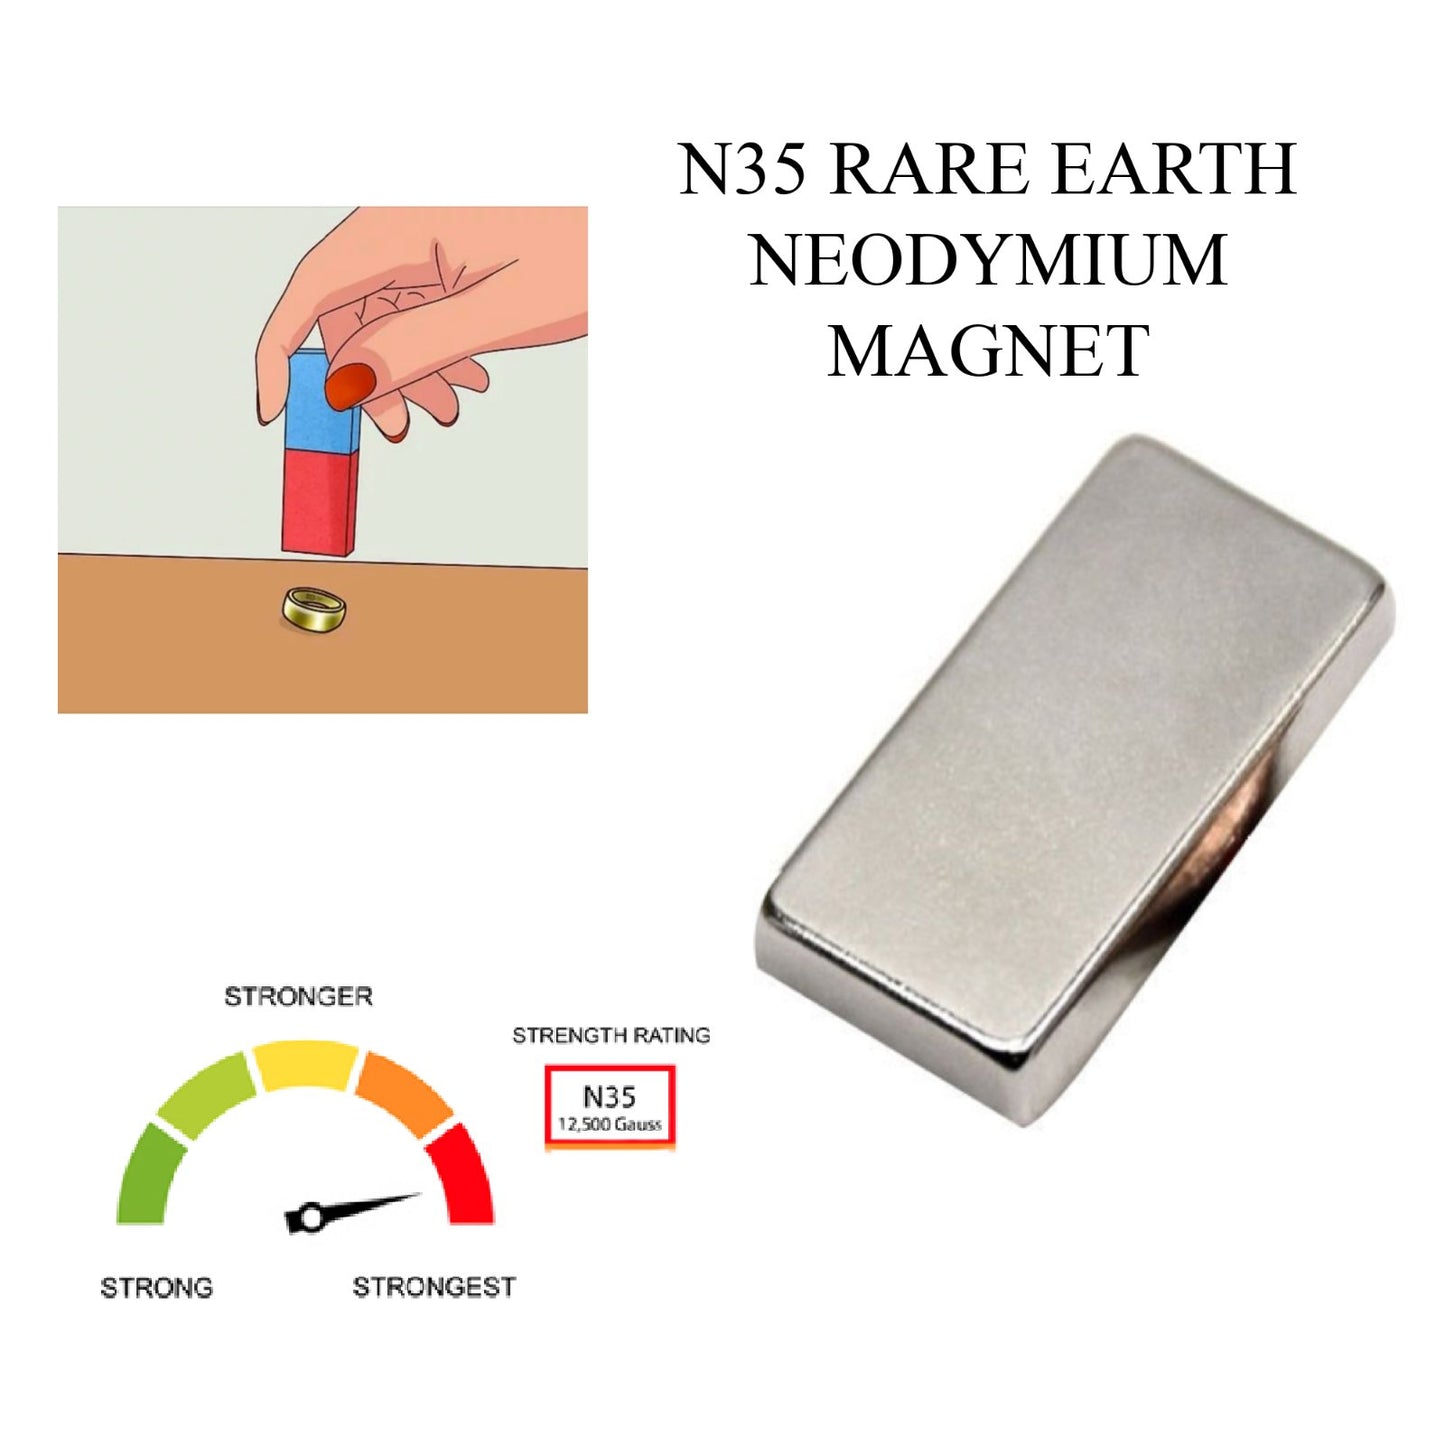 JSP Gold Testing Acid 10K 14K Test Kit + Scratch Tester Stone + Rare Earth Magnet Jewelry Test Detect Precious Metals